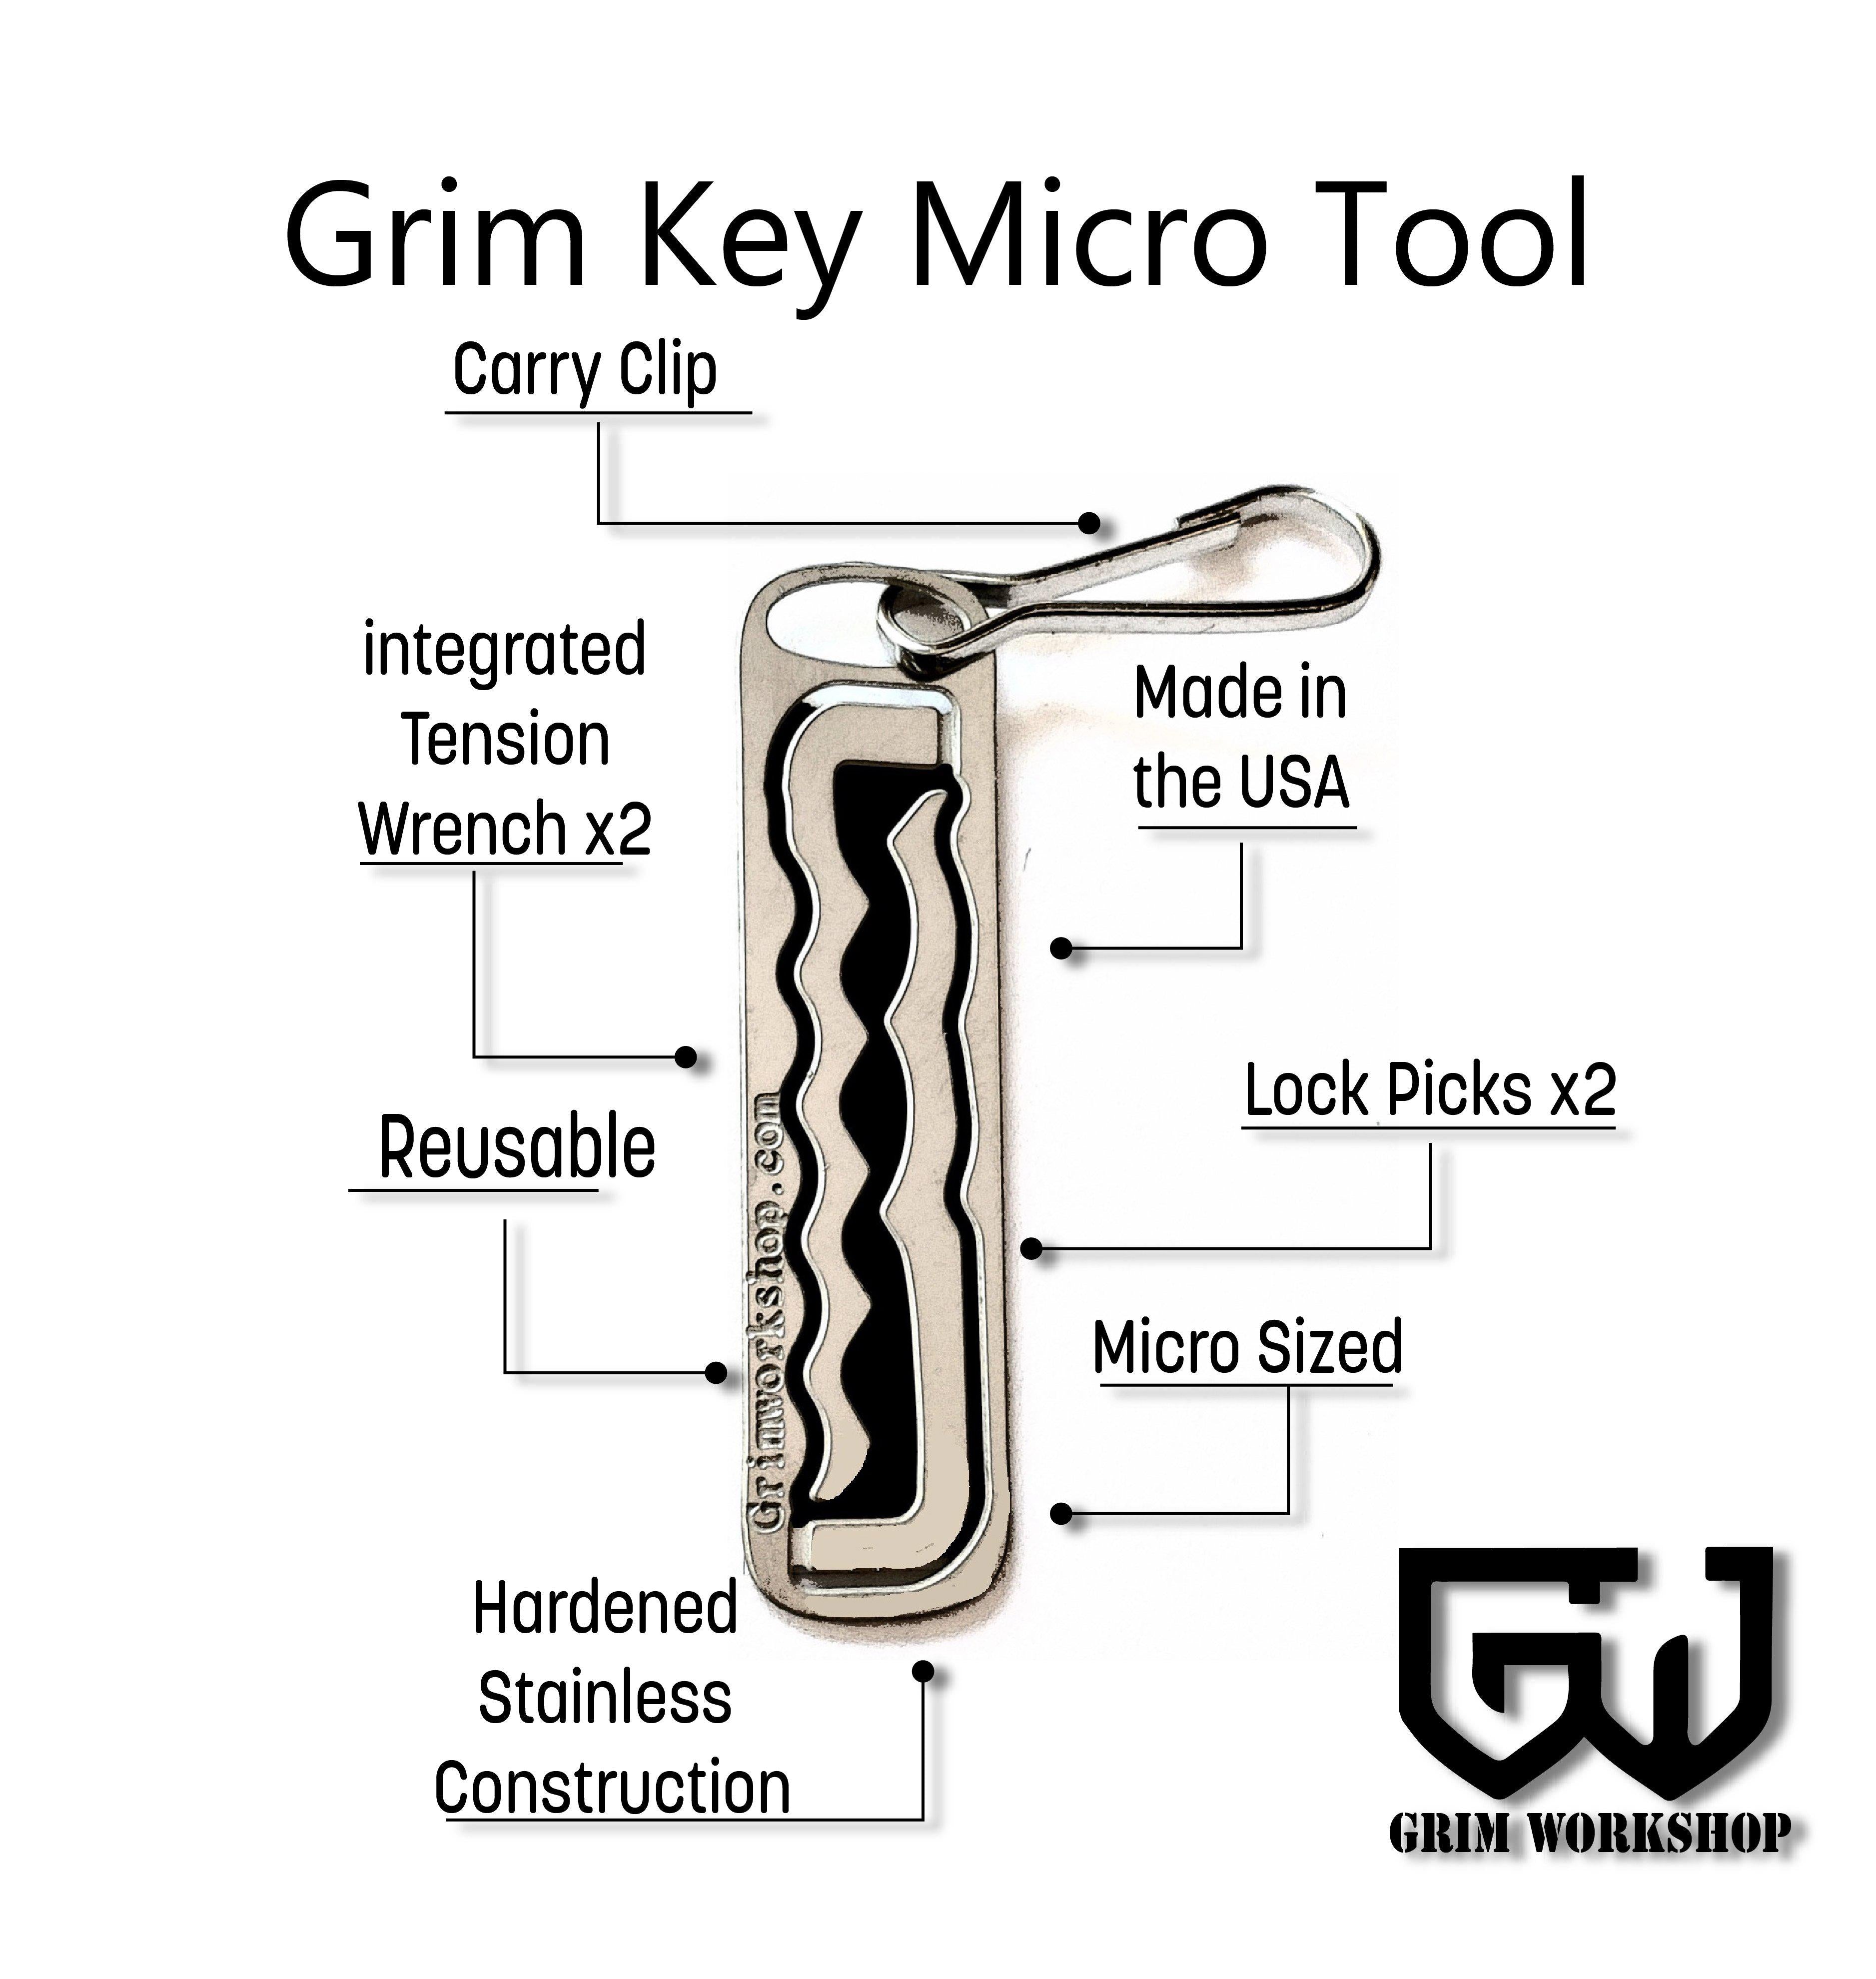 grim key micro lock pick keychain. This keychain lock pick is a great micro lock pick set.